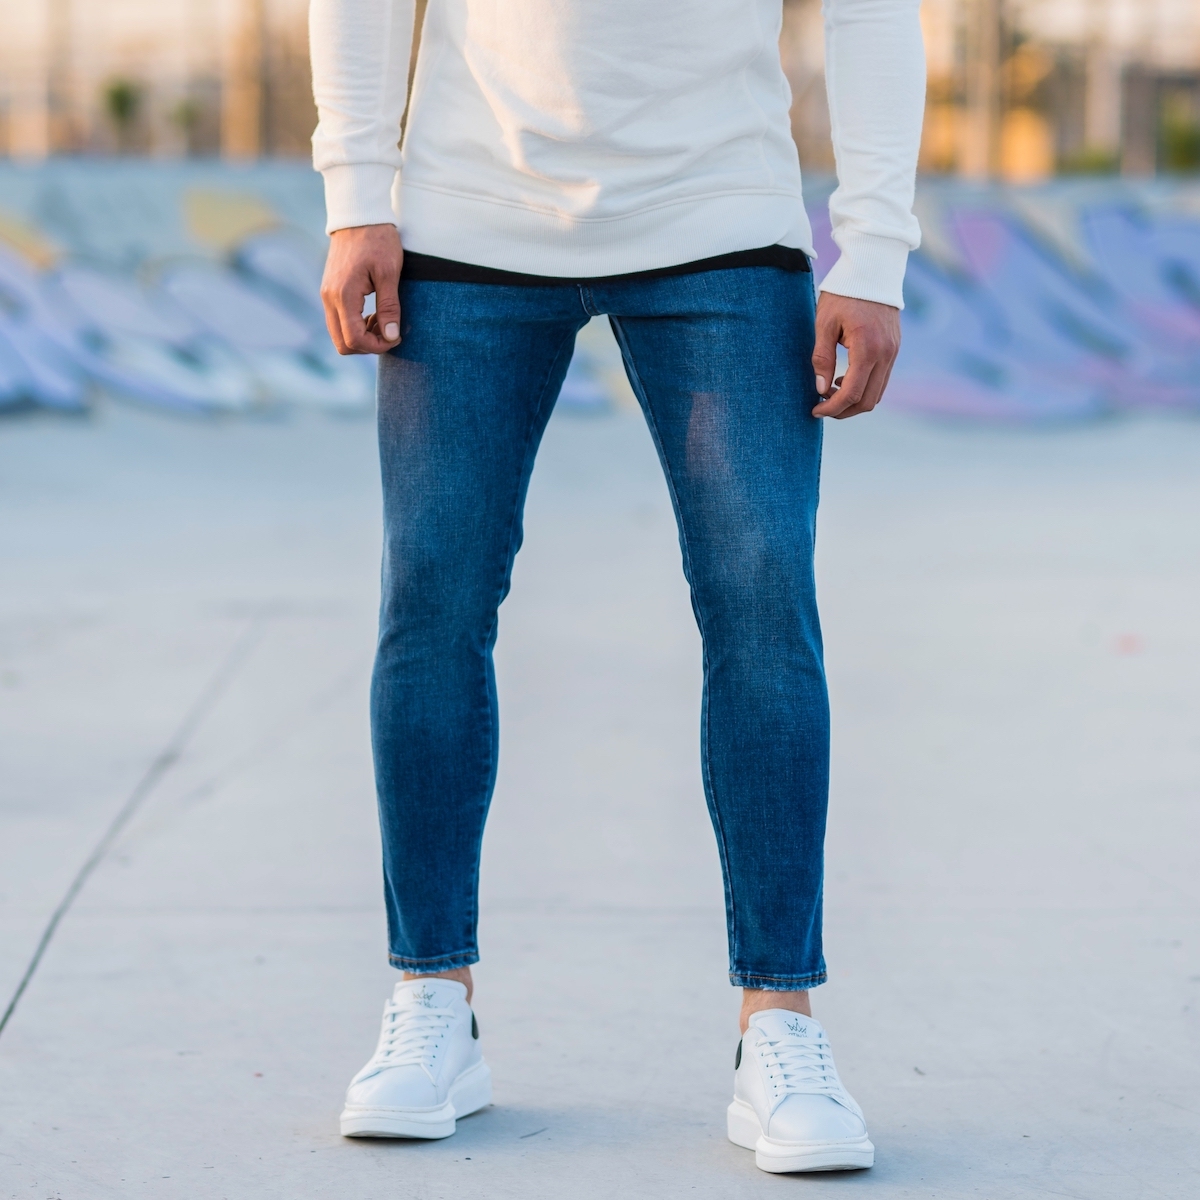 blue skinny jeans mens